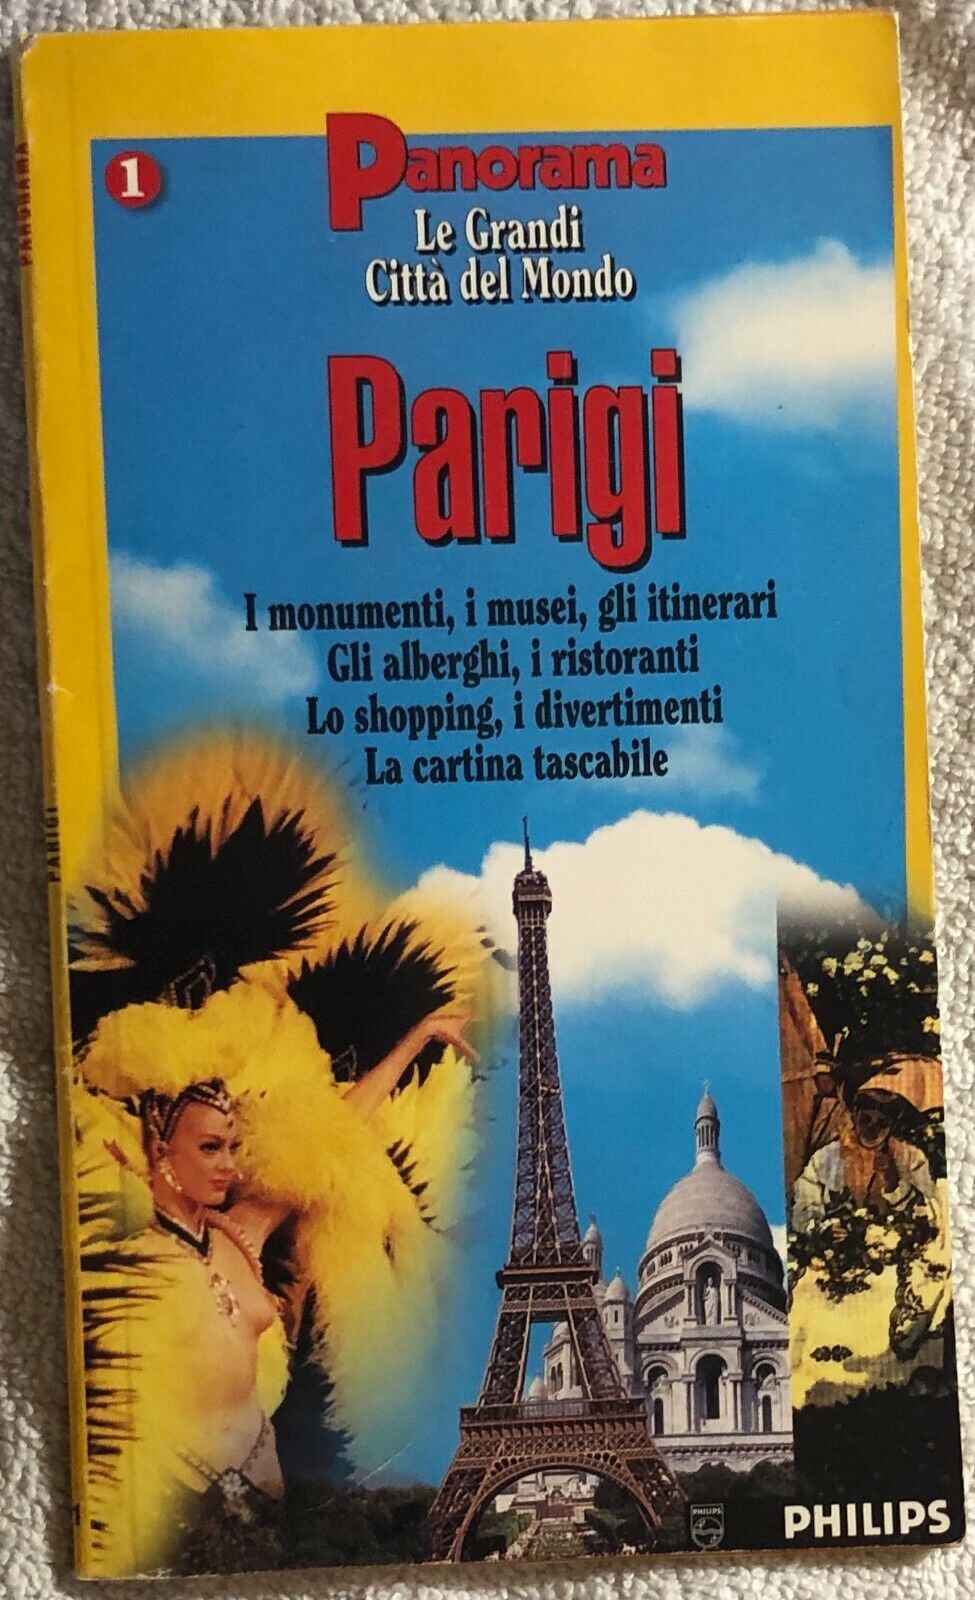 Le grandi citt? del mondo - Parigi di Aa.vv.,  1995,  Panorama